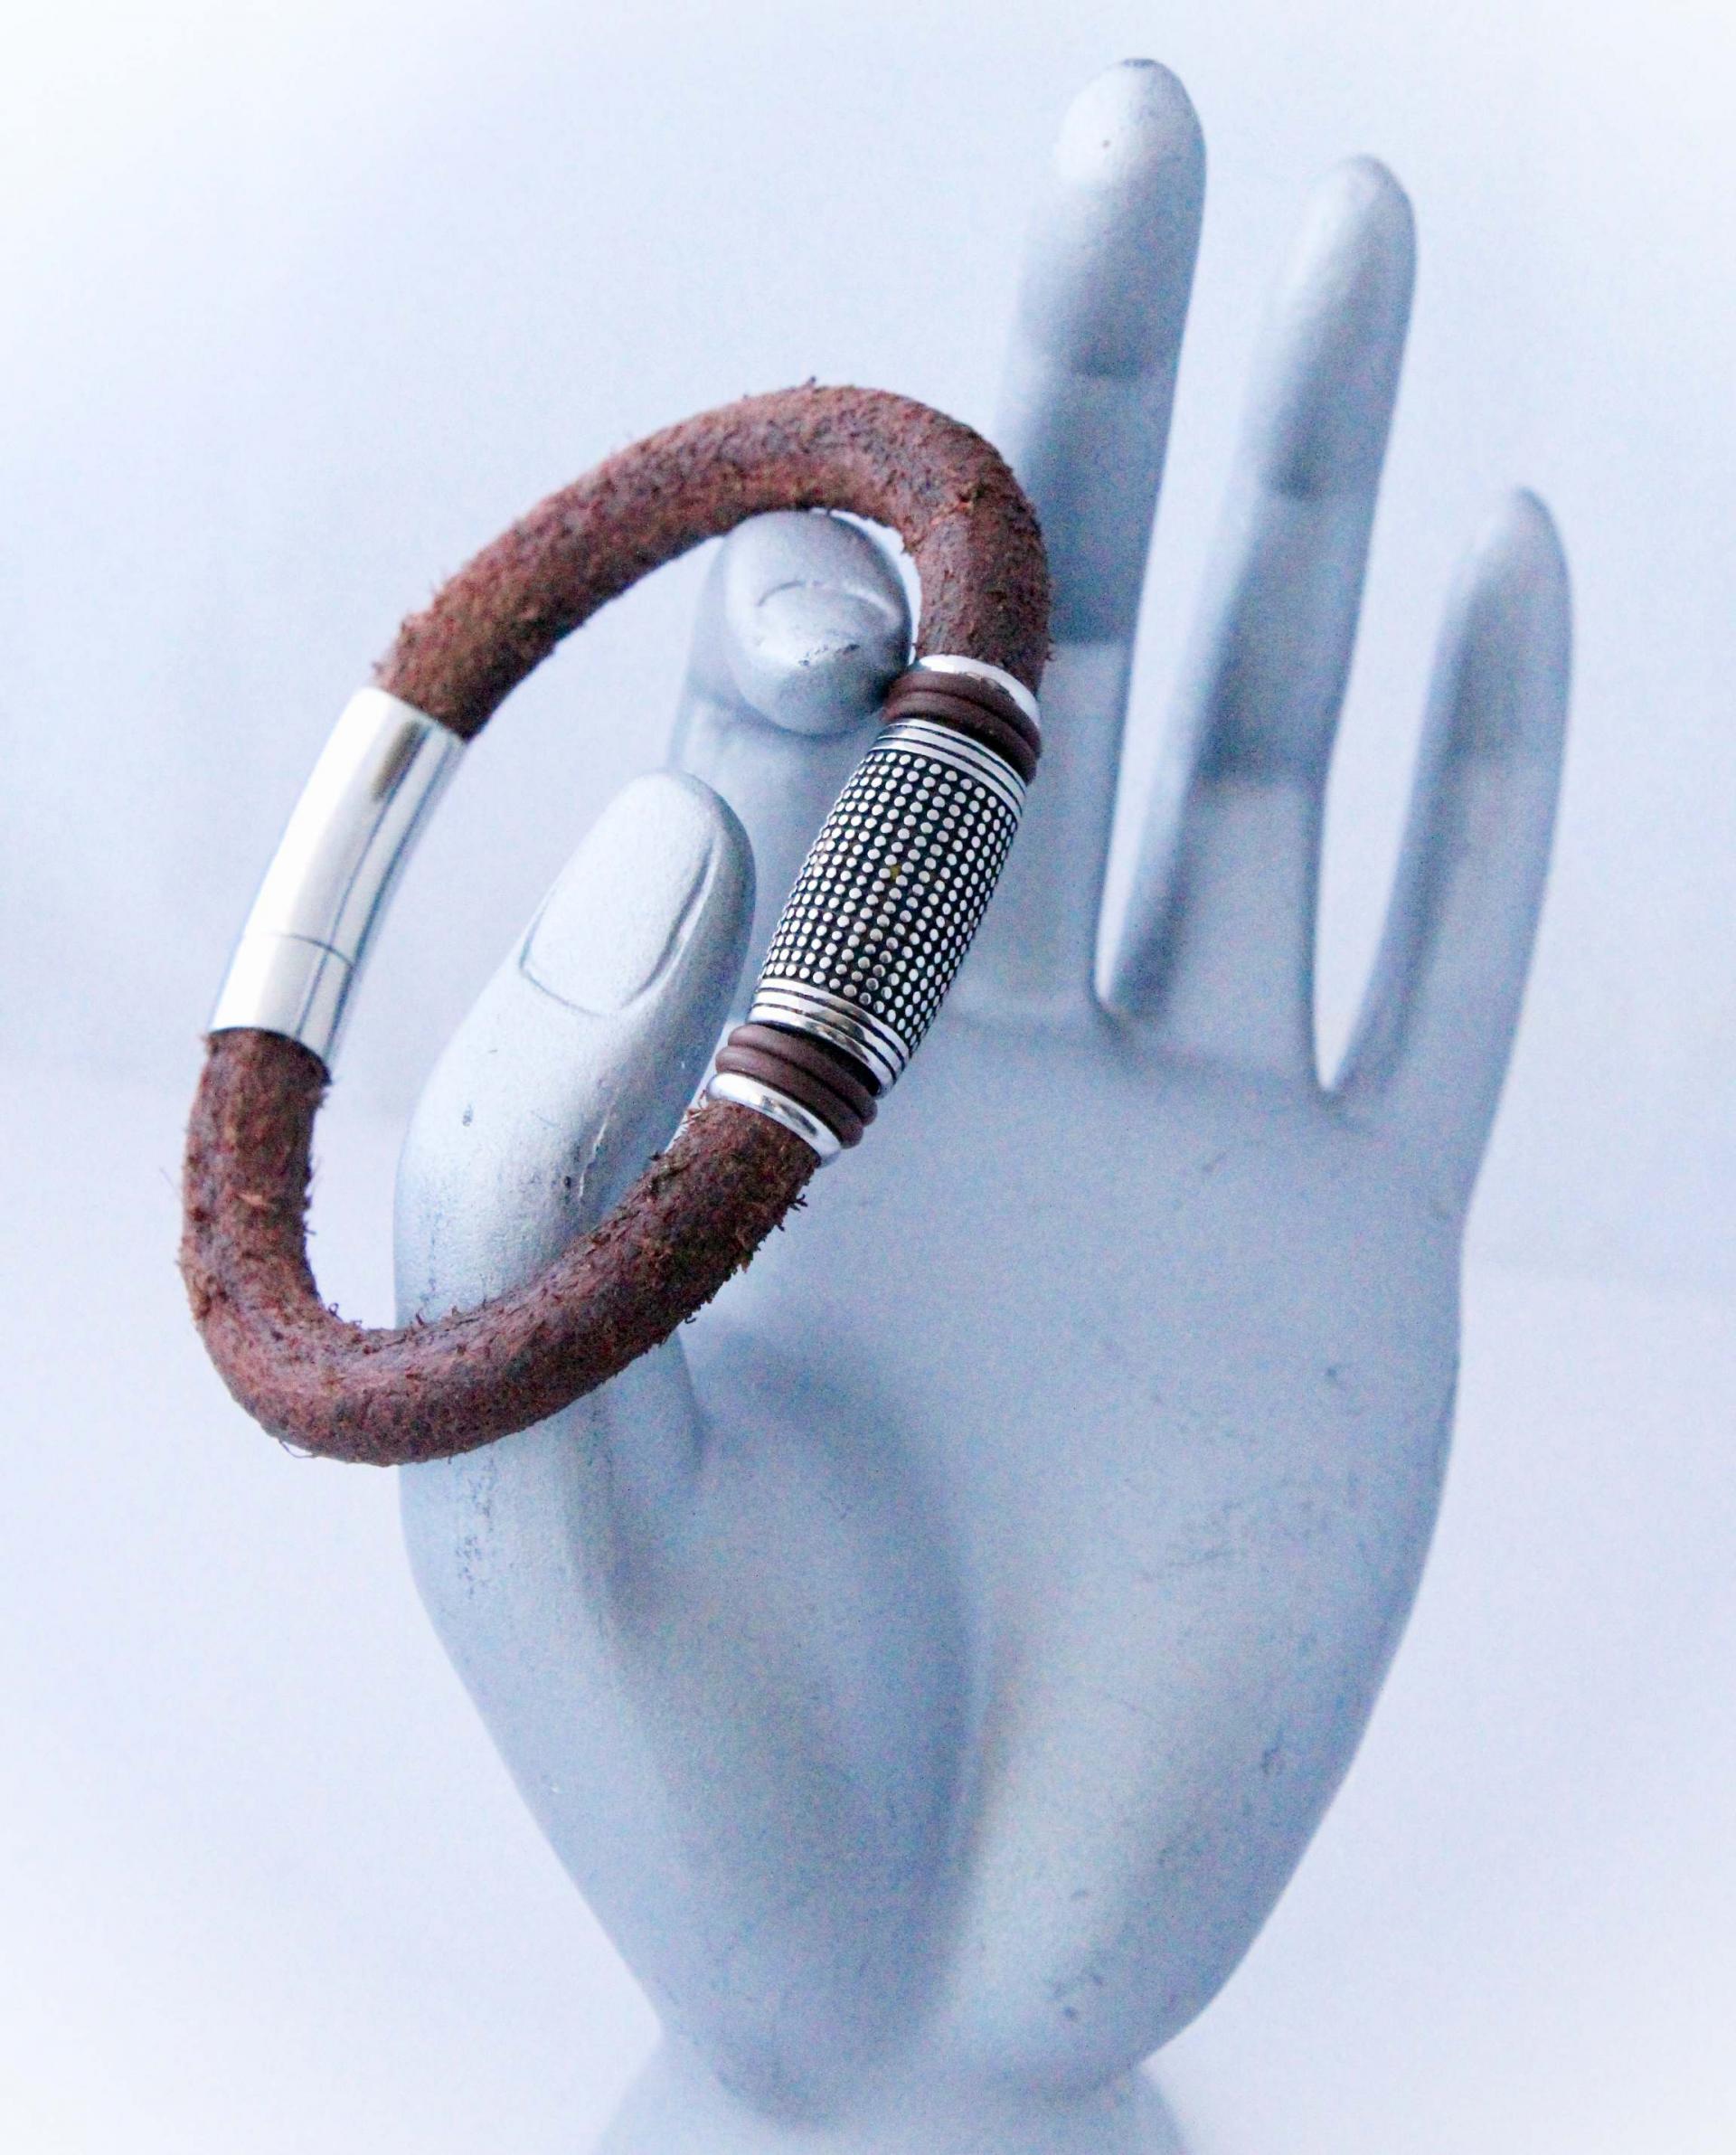 Leather & Steel Bracelet - Lattice Design - Customise!